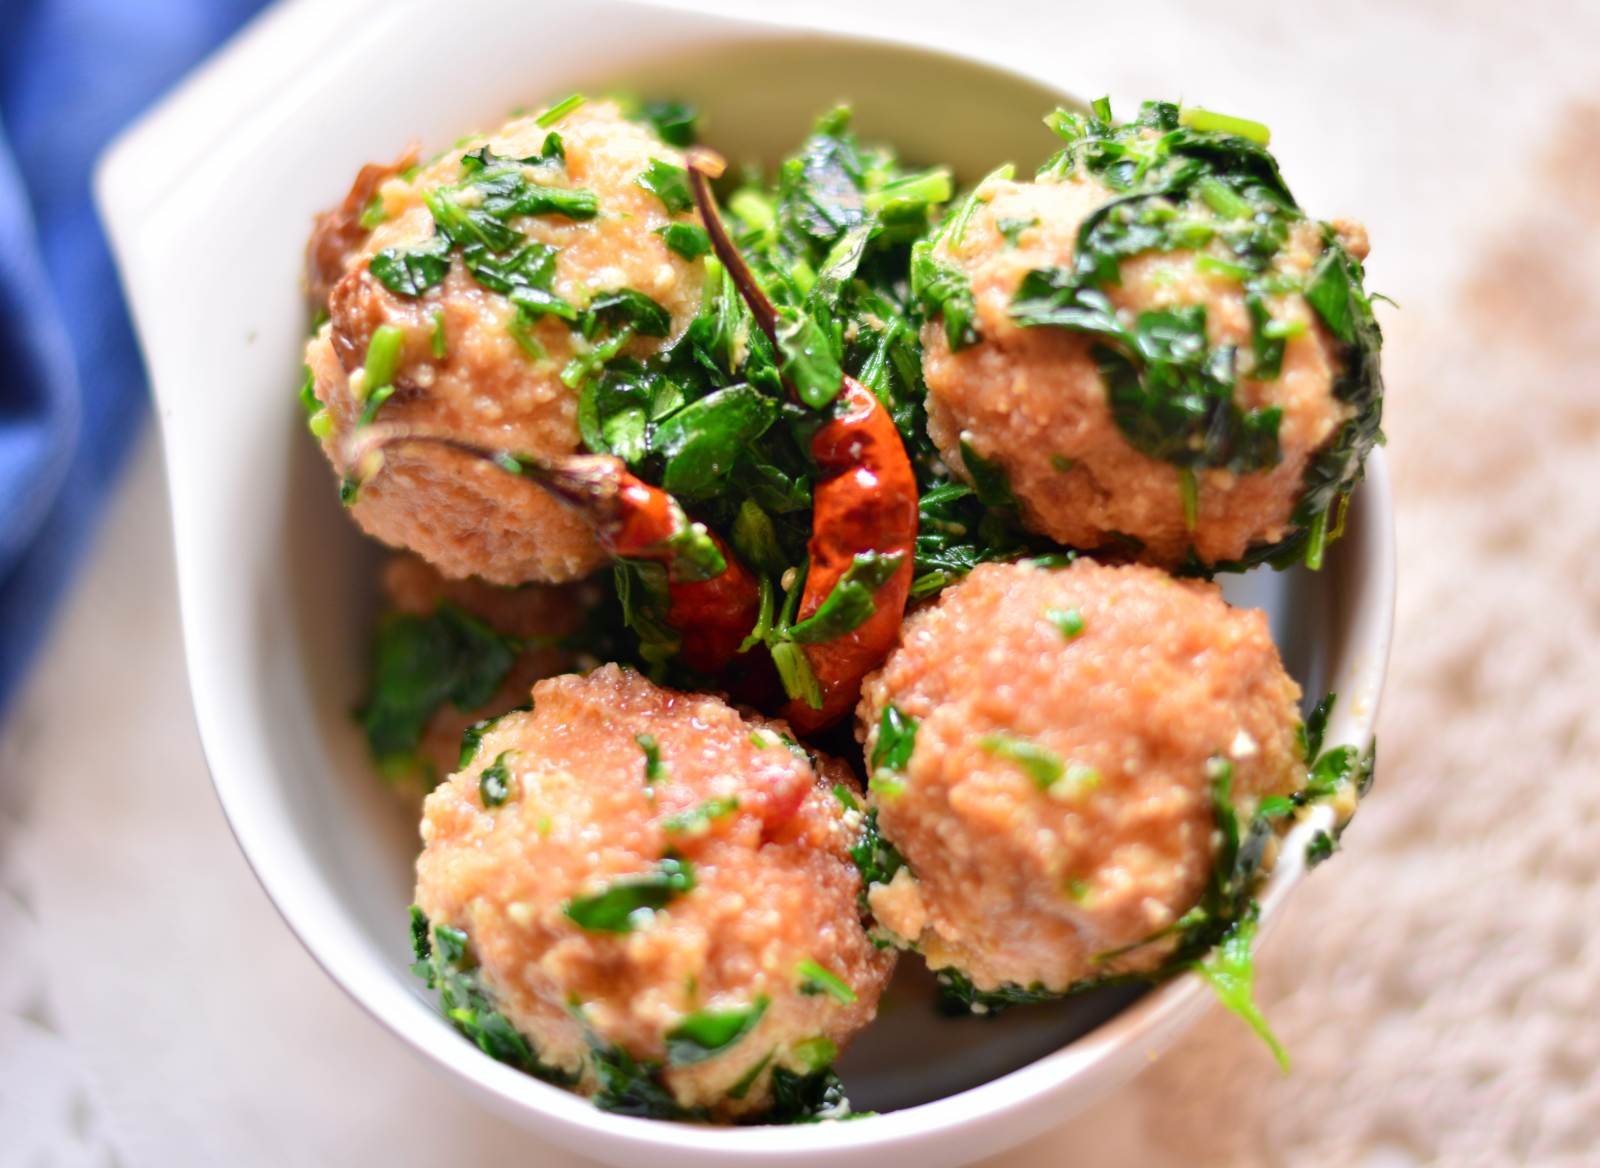 Kashmiri Methi T Golemach Recipe-Minced Chicken Balls With Fenugreek Leaves